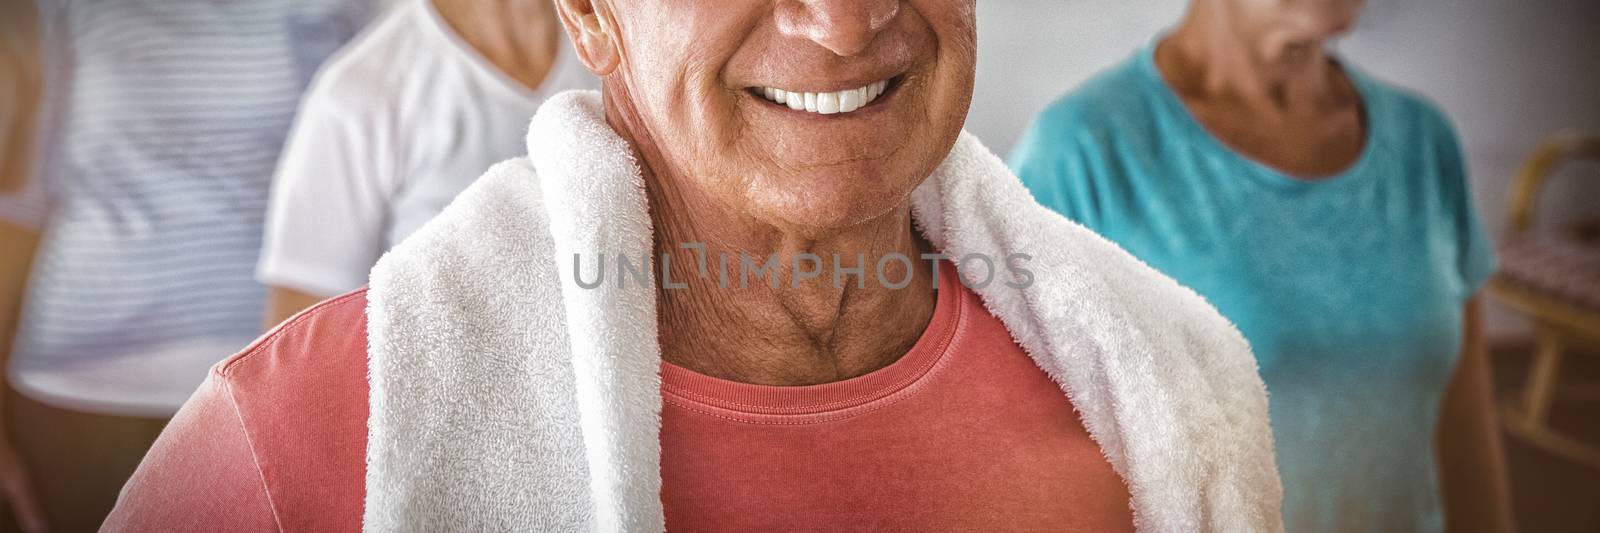 Portrait of senior smiling after exercises  by Wavebreakmedia